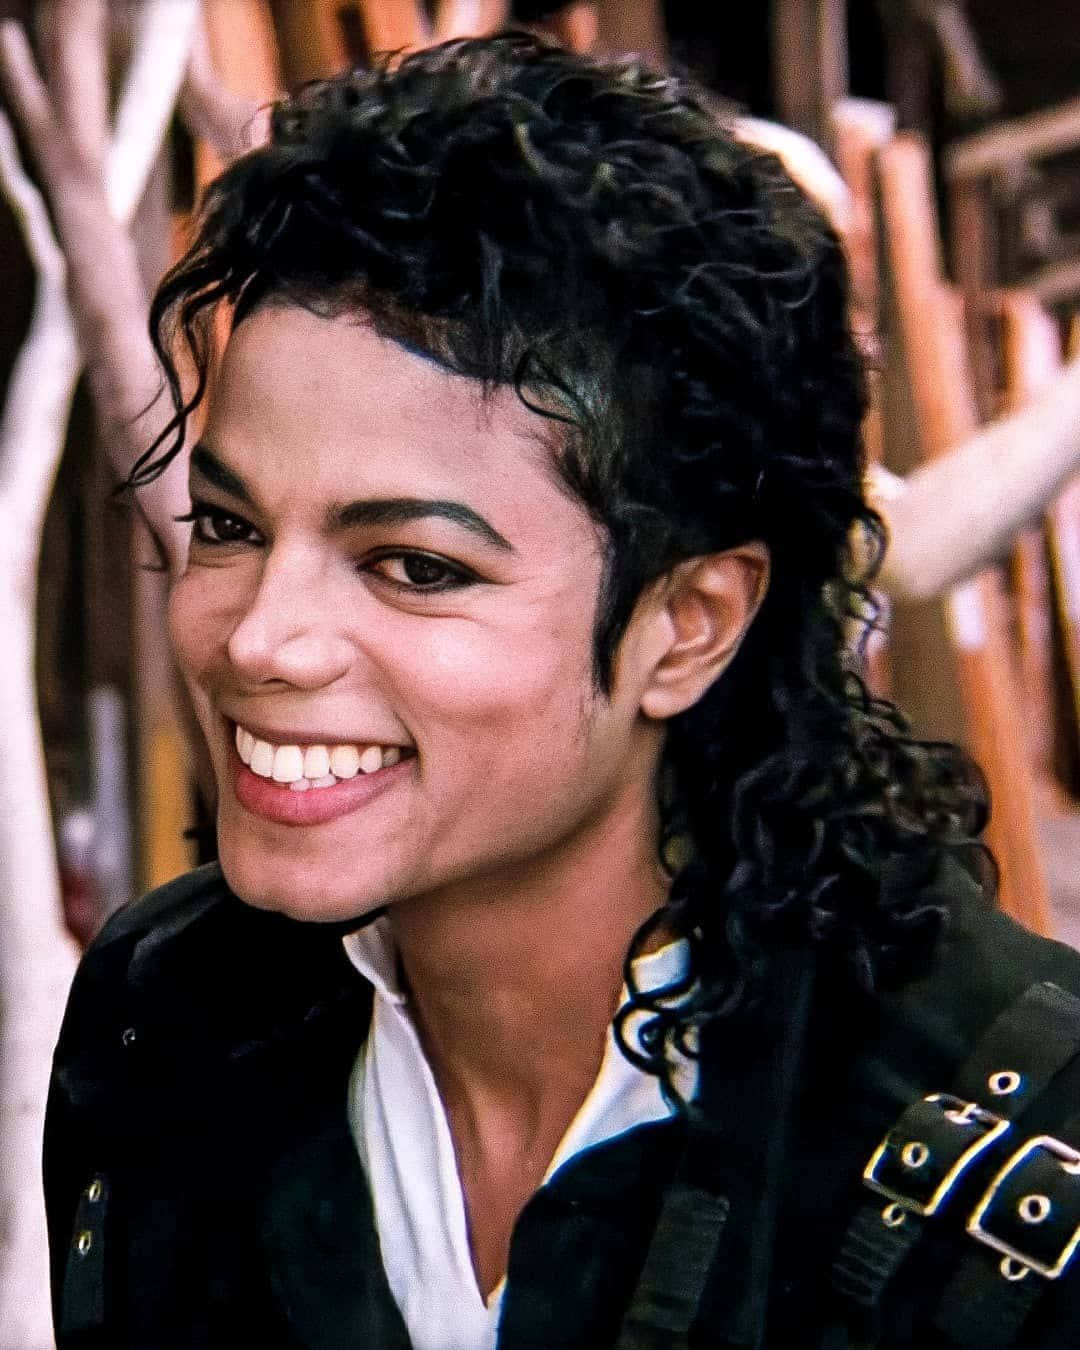 Iconic Smiling Entertainer Portrait